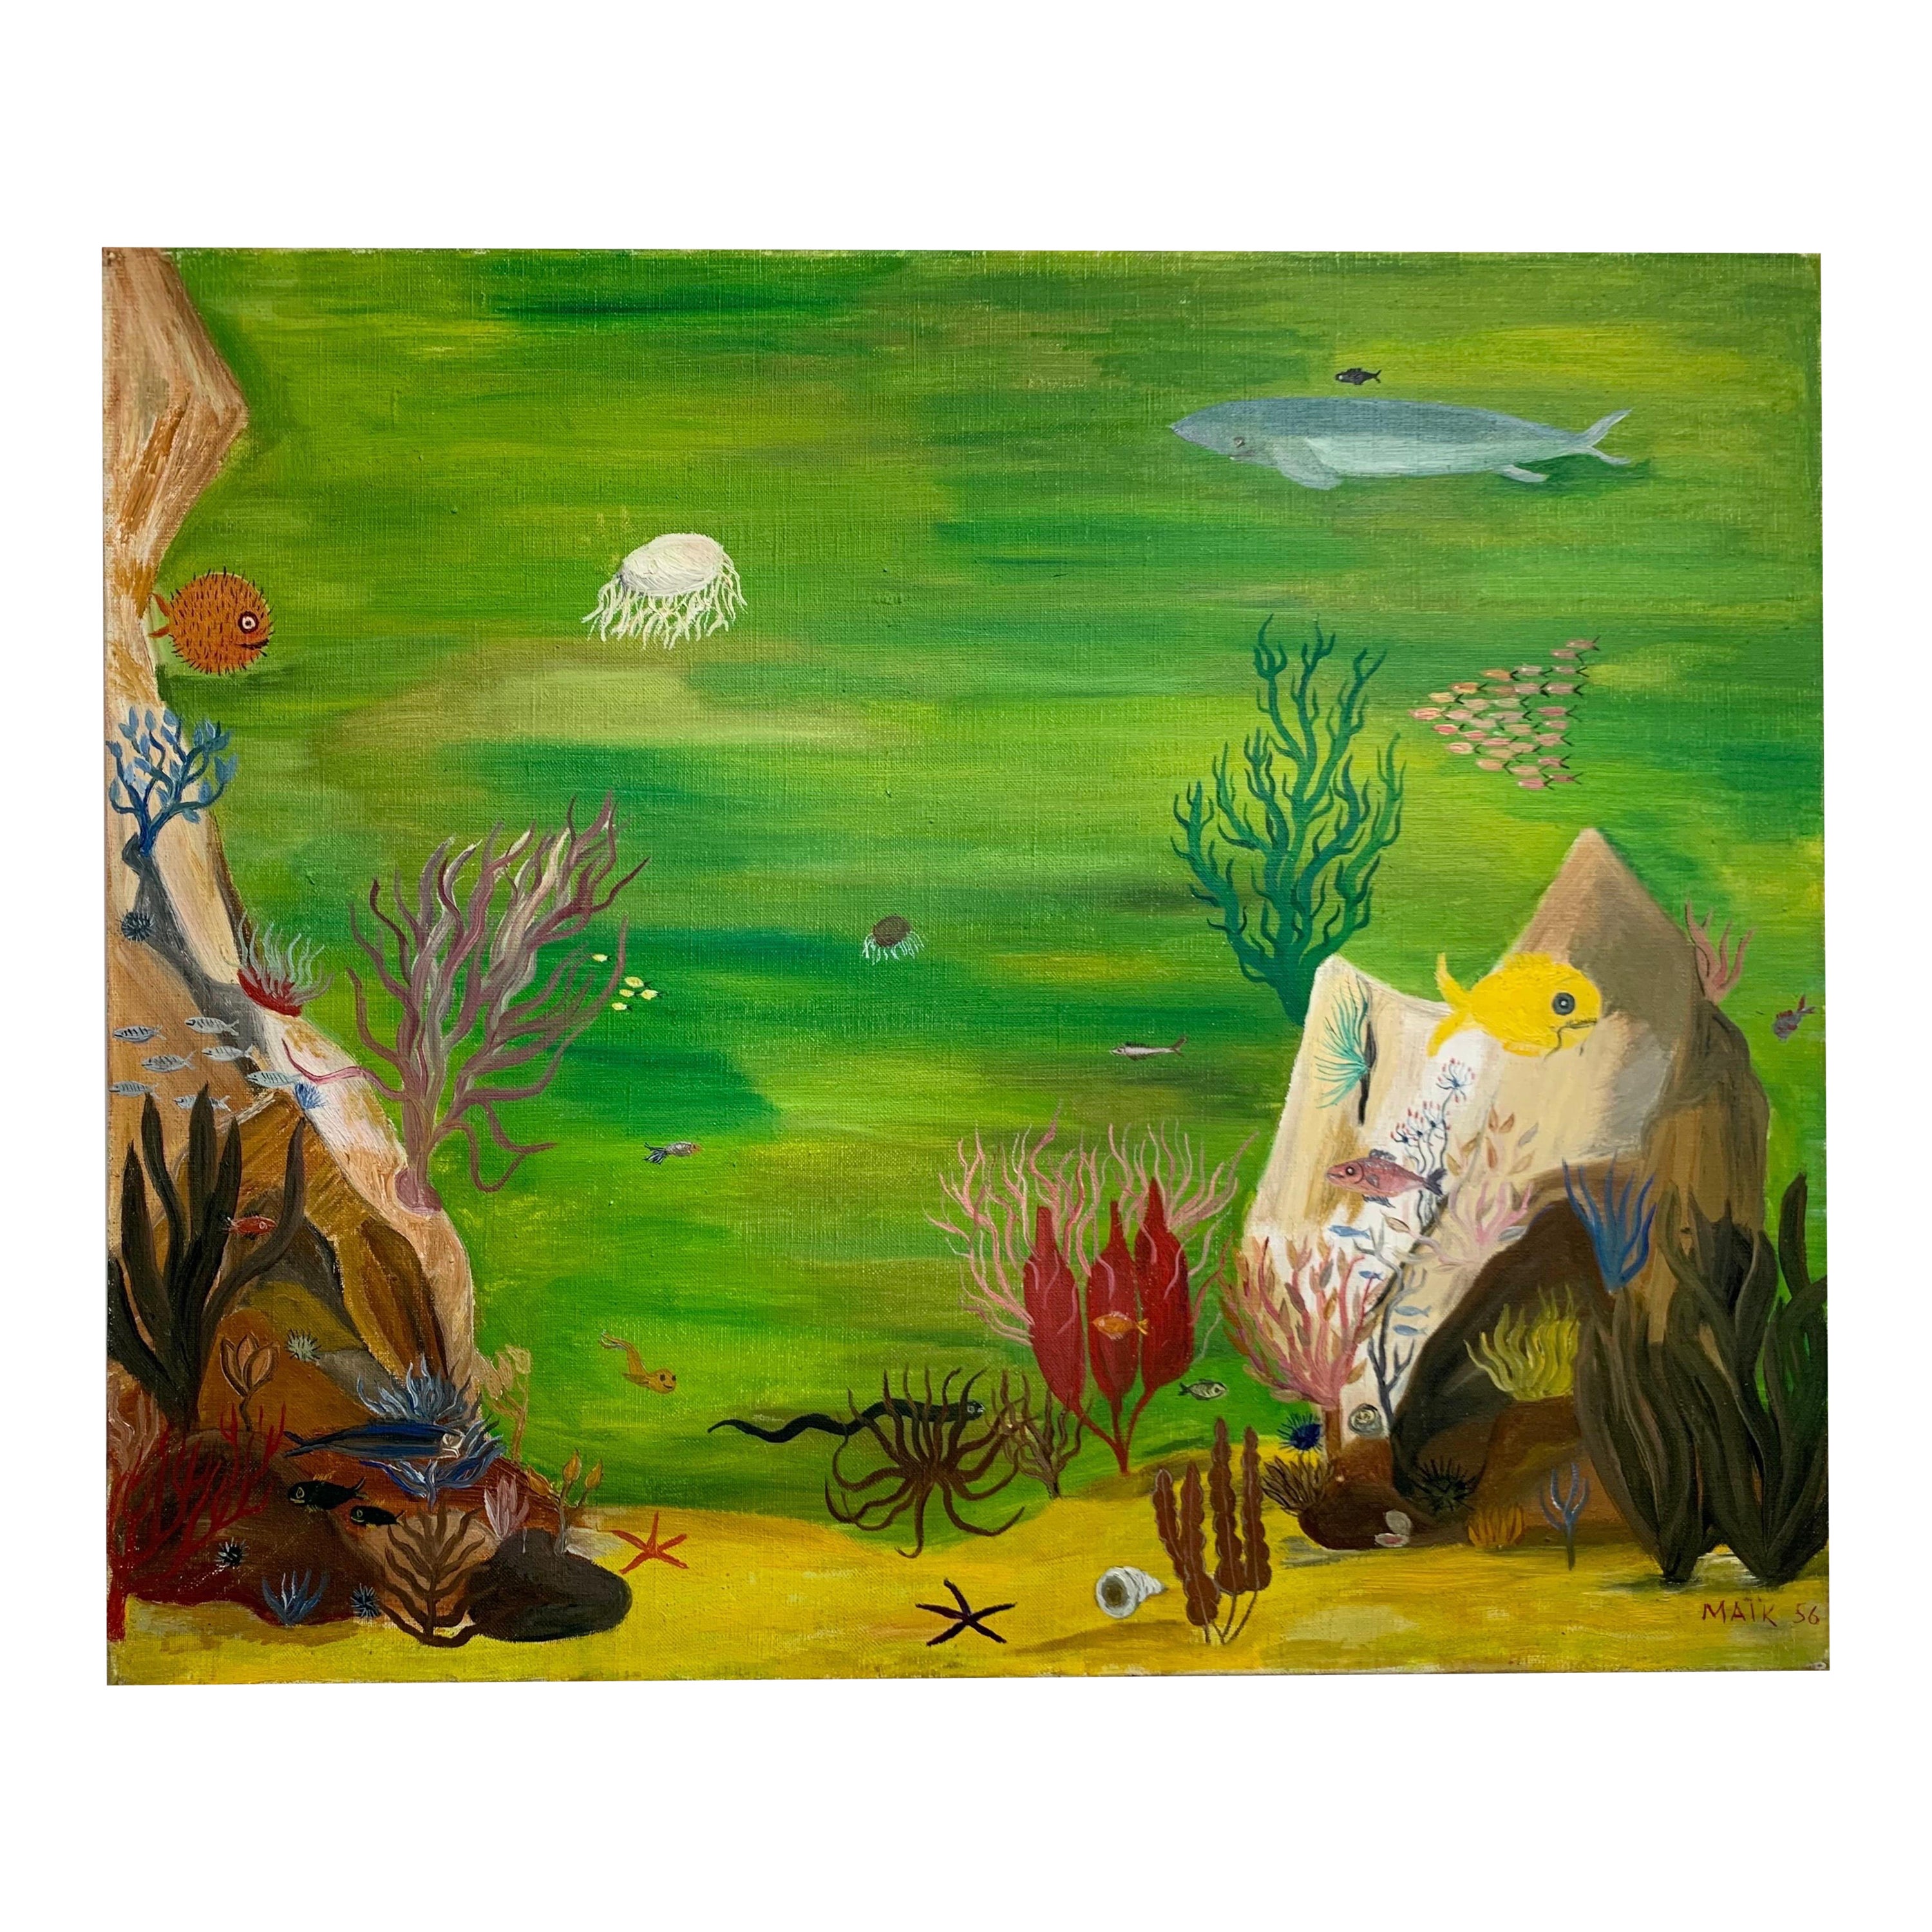 “Underwater Landscape » Henri Hecht MAÏK 1956, French Painter, Oil on Canvas 